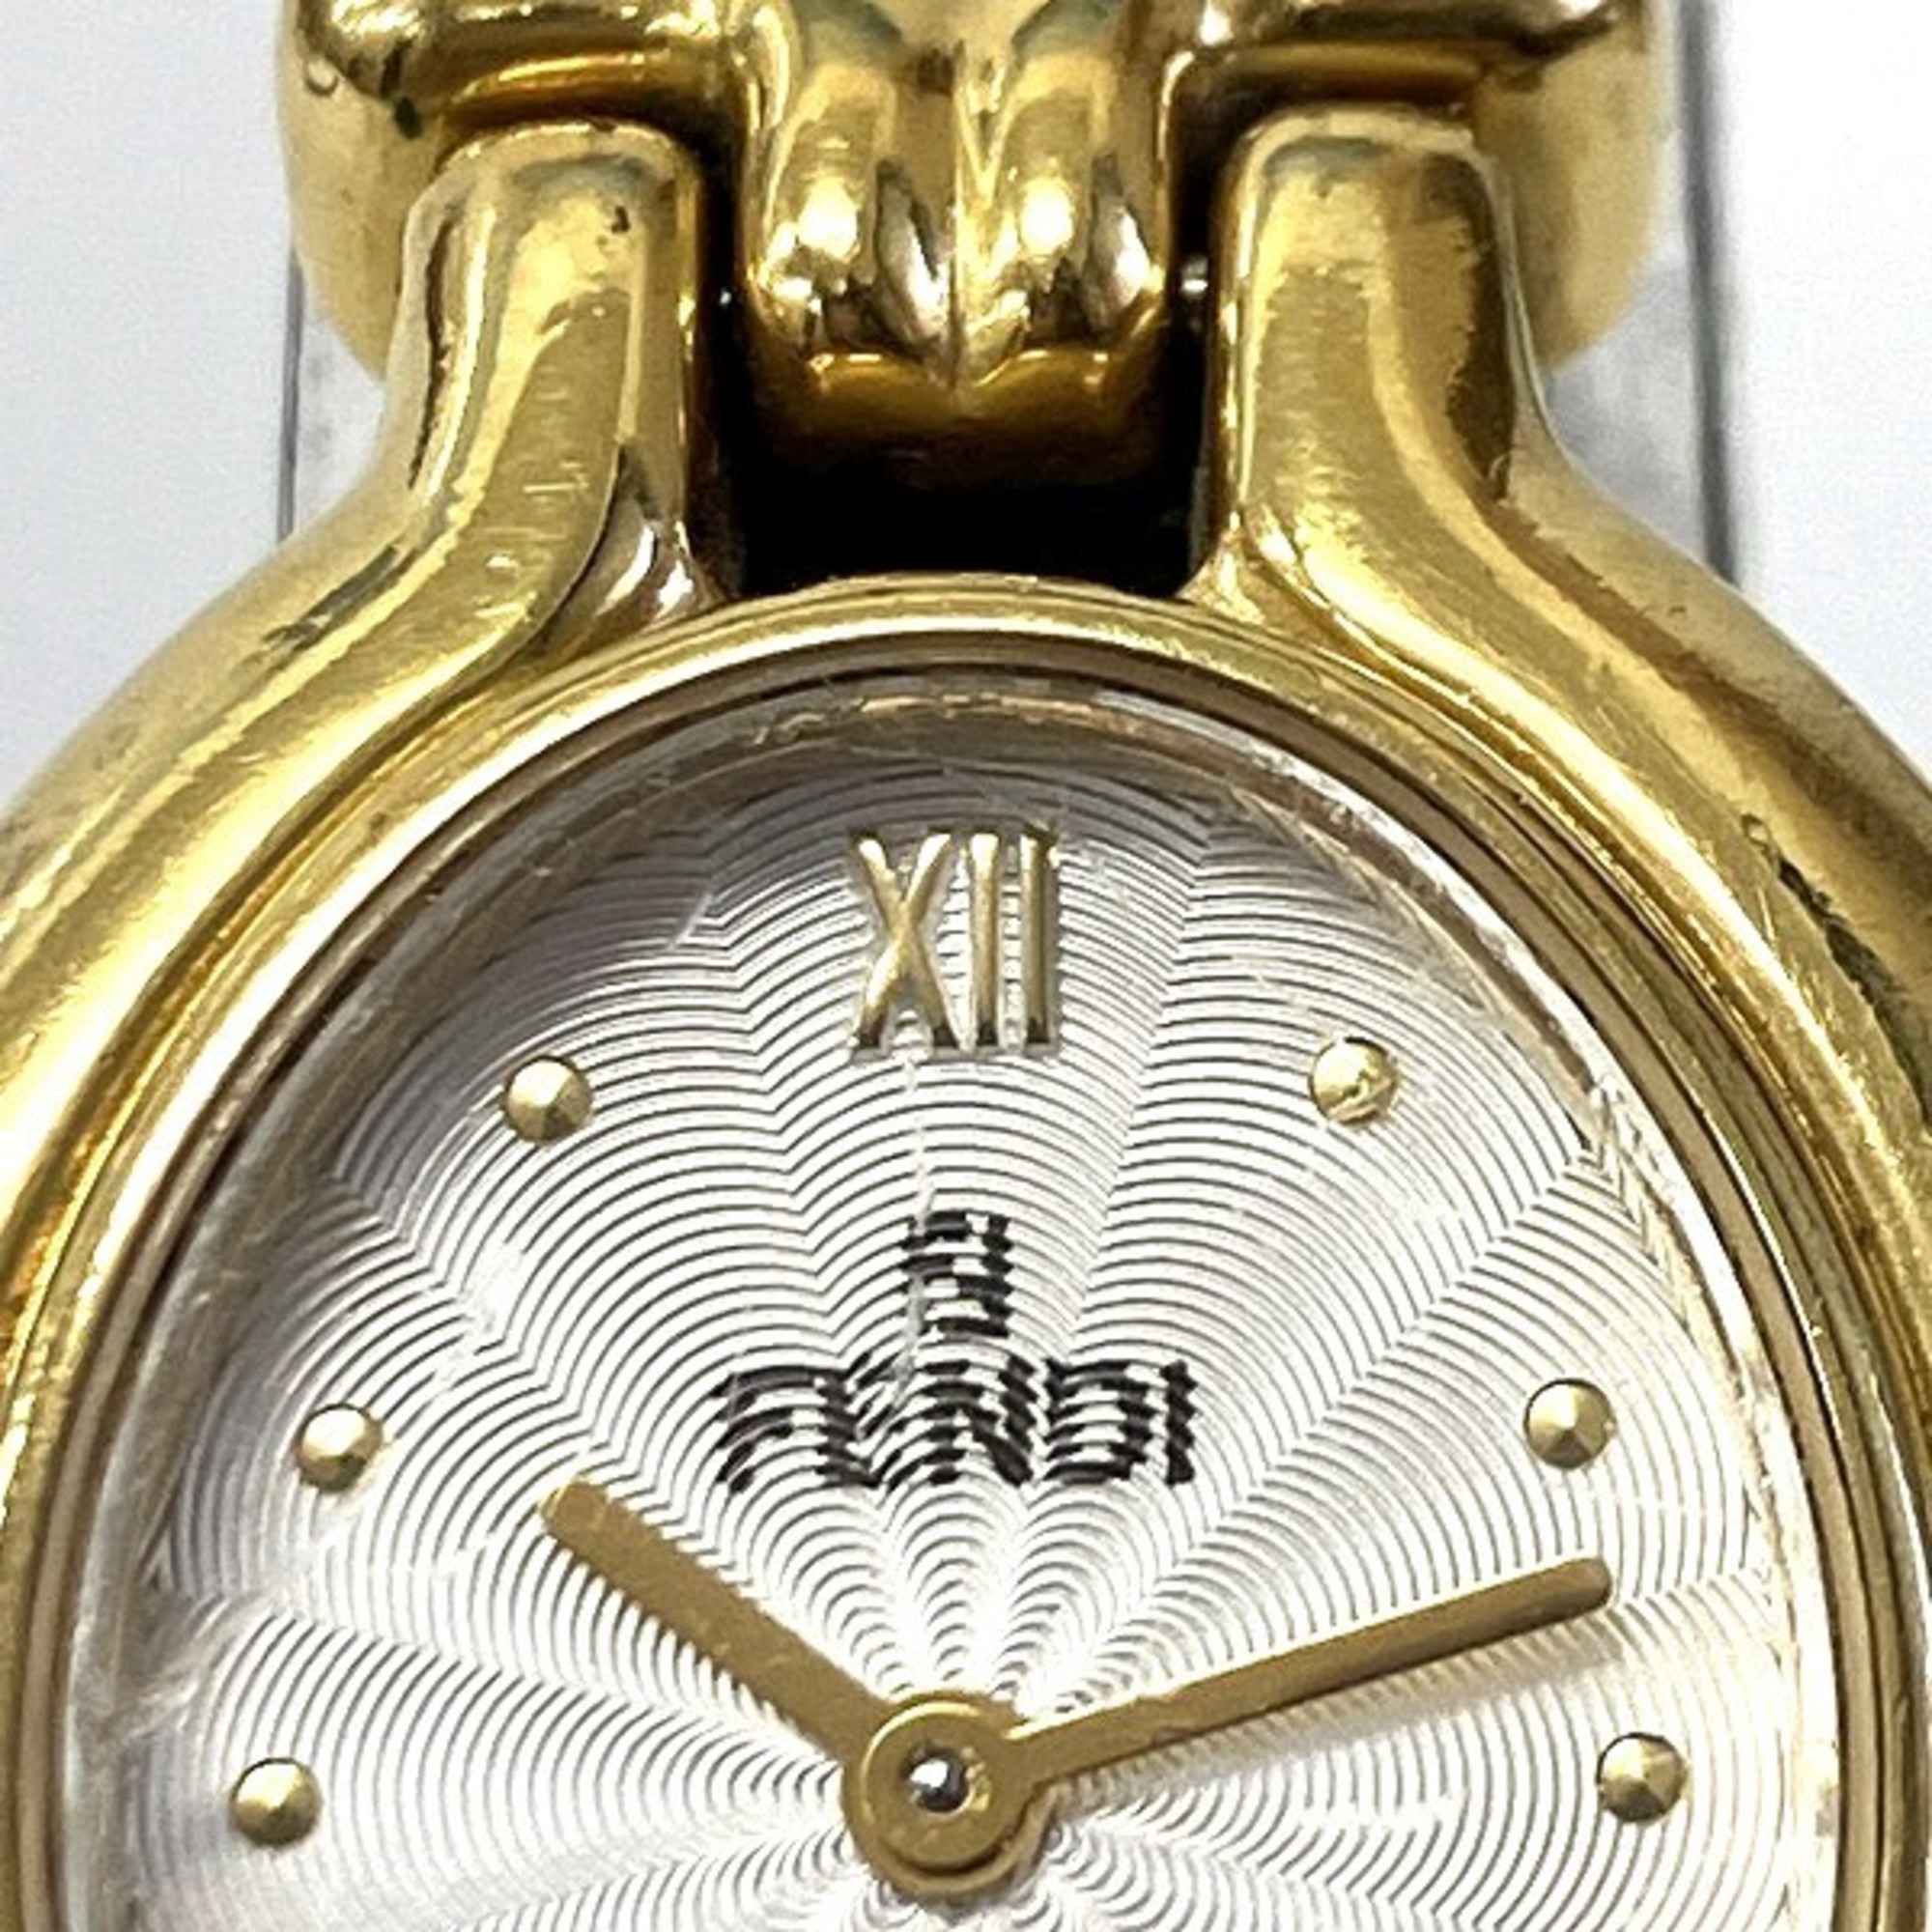 FENDI 640L Quartz Change Belt Clock Watch Ladies